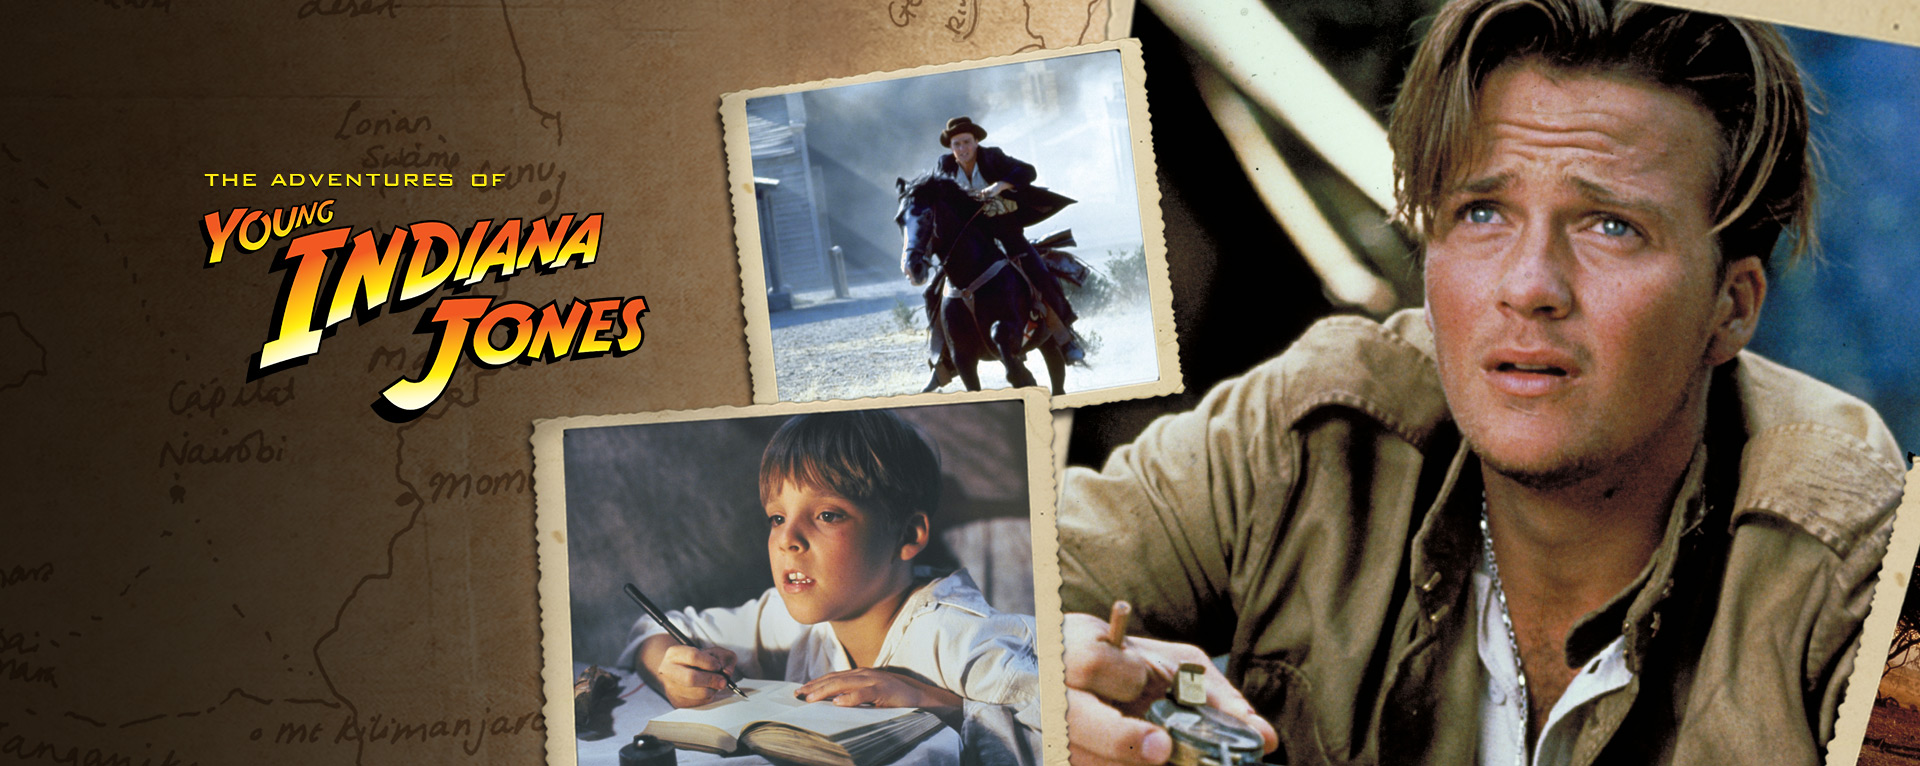 Indiana Jones Coming to Disney+ on May 31